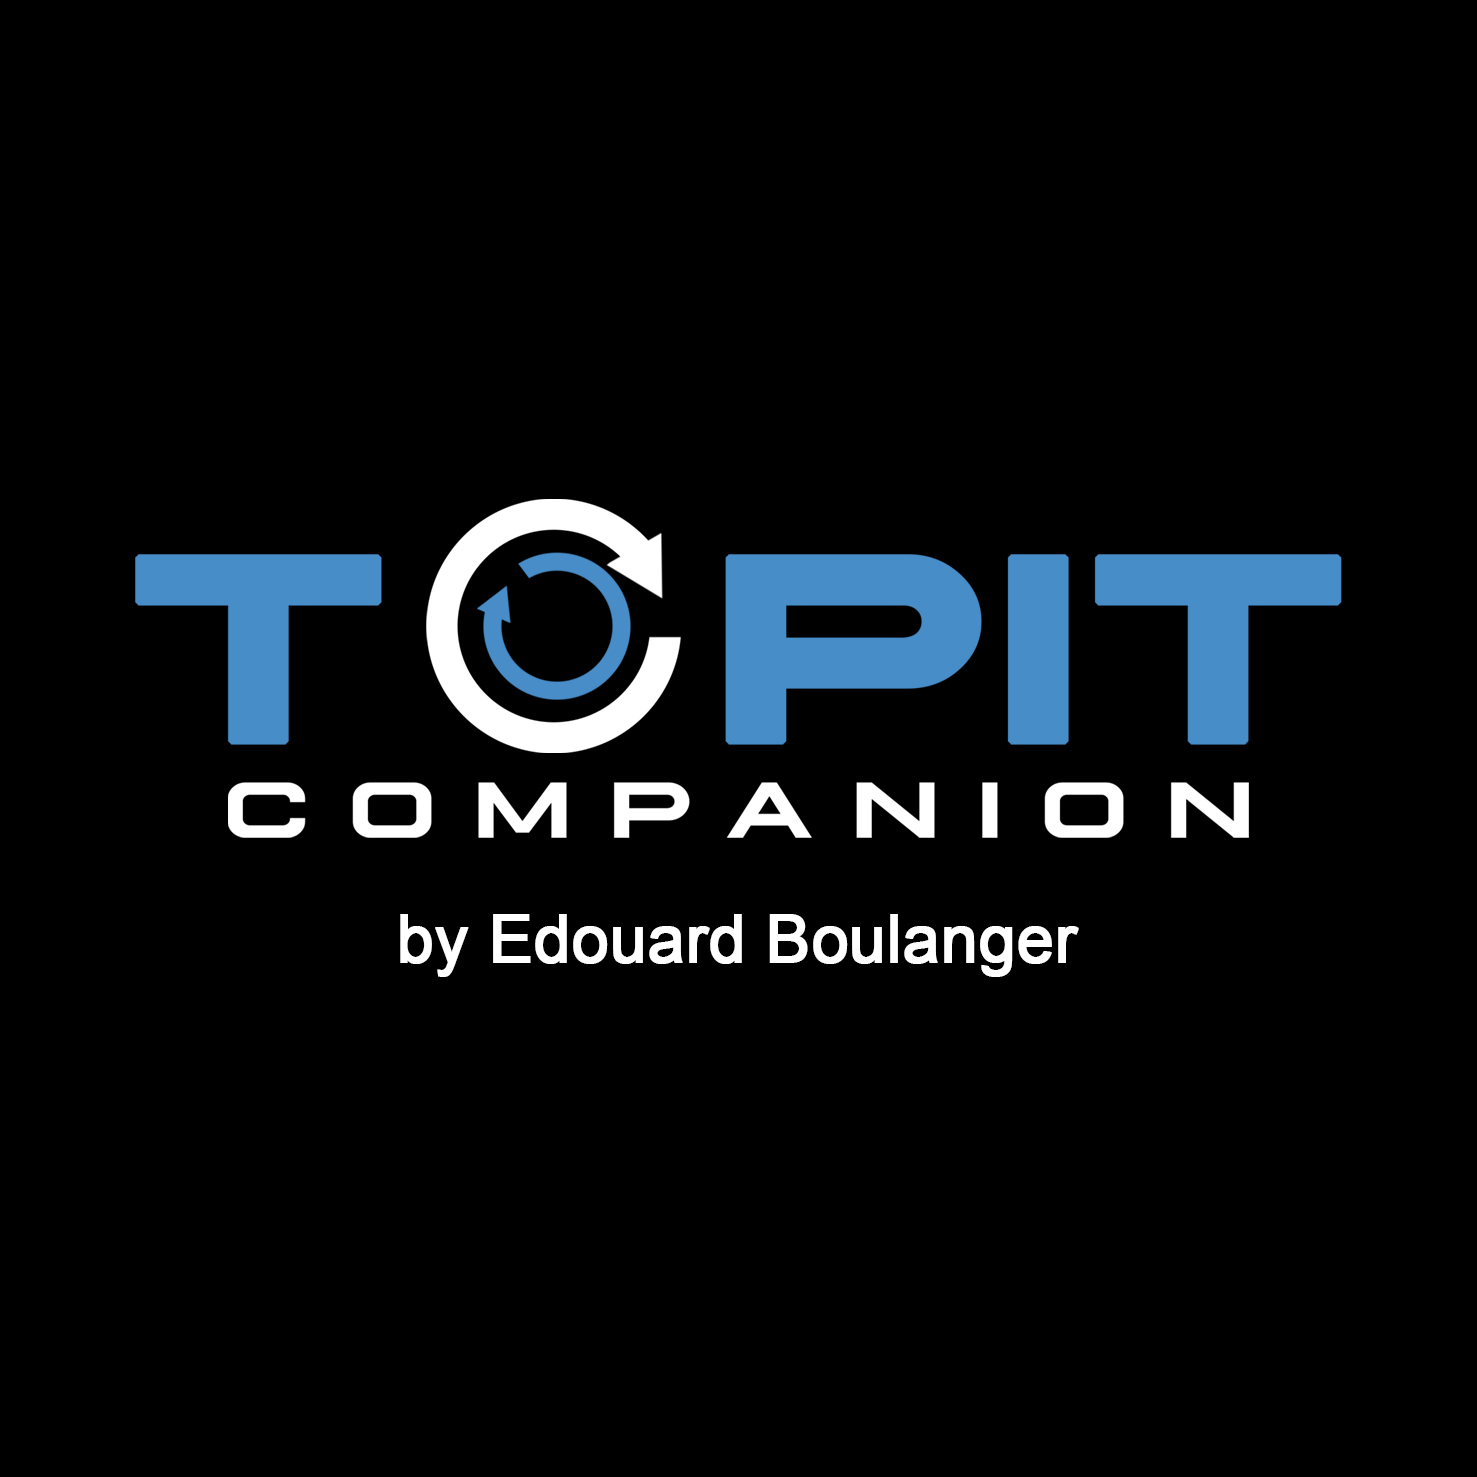 Topit Companion Edouard Boulanger